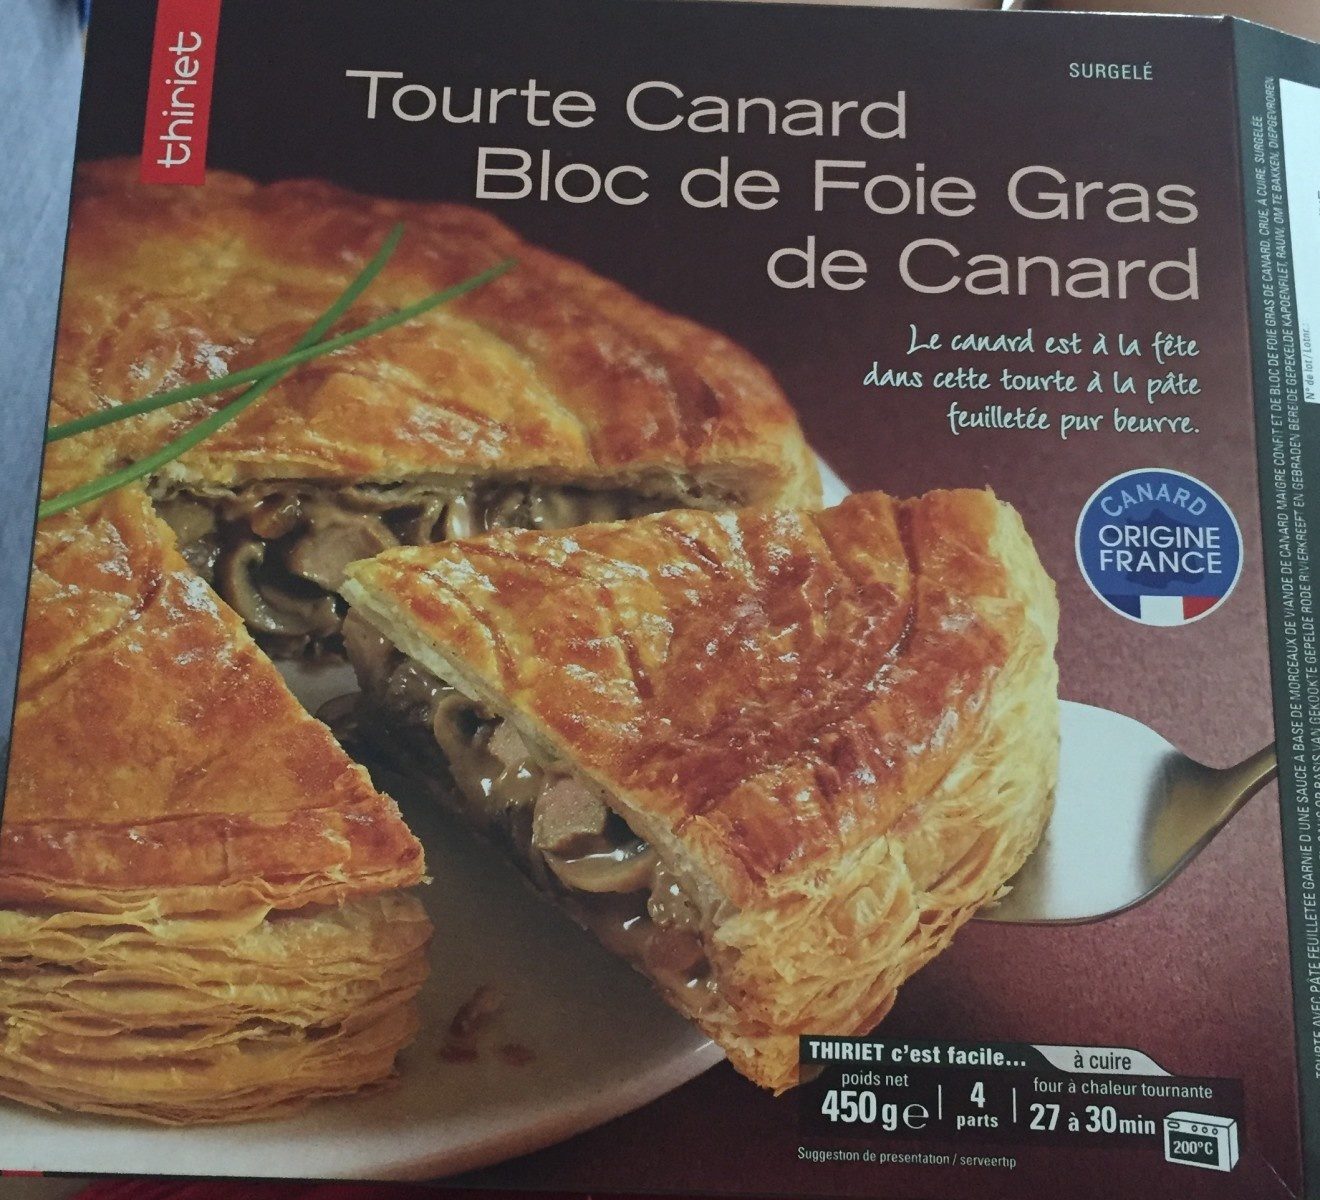 Tourte Canard, Bloc de Foie Gras de Canard - Product - fr